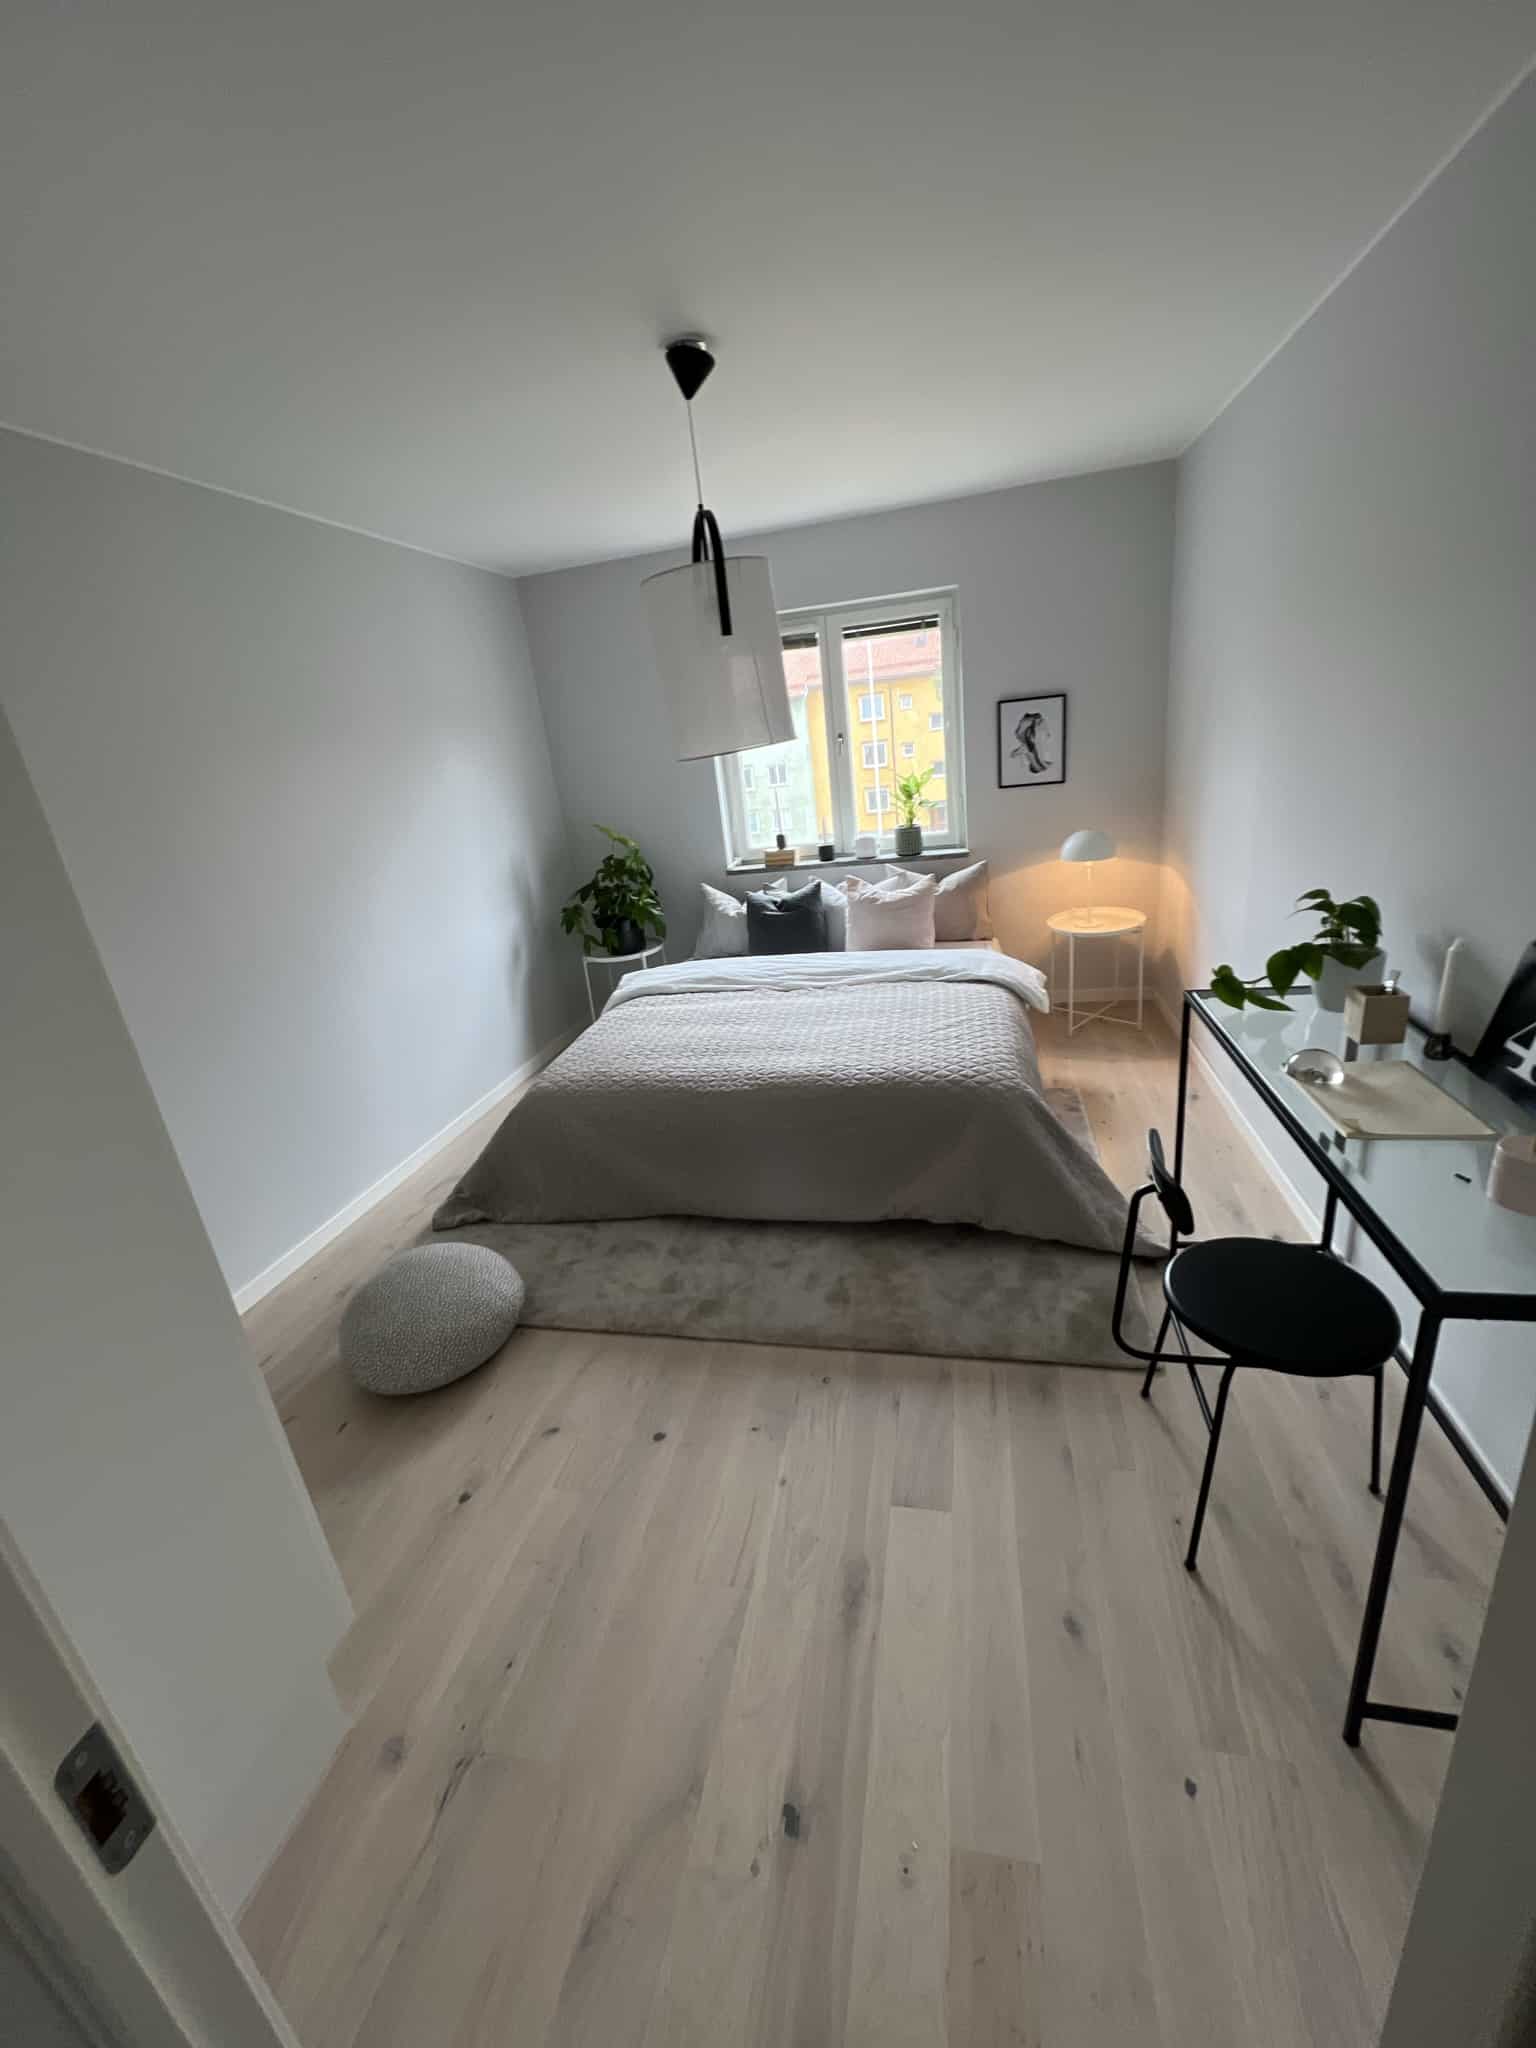 Referensjobb "Nymålat sovrum" utfört av Stockholm Bygg & Badrum AB